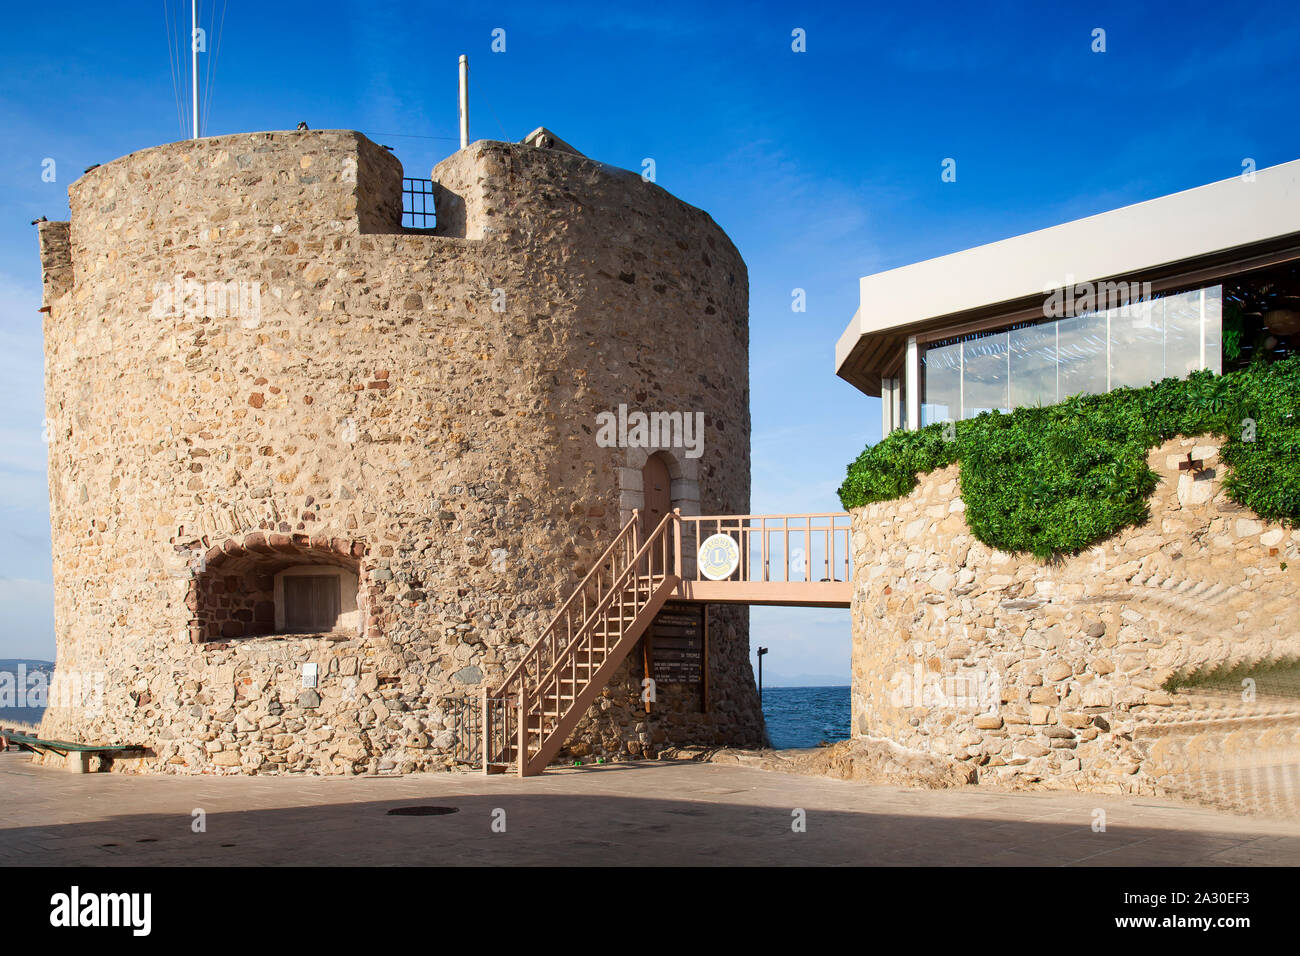 Die alte Zitadelle, Artilleriefestung  von Saint-Tropez, Département Var, an der Cote d'Azur, Provence, Südfrankreich, Frankreich, Europa| The old cit Stock Photo